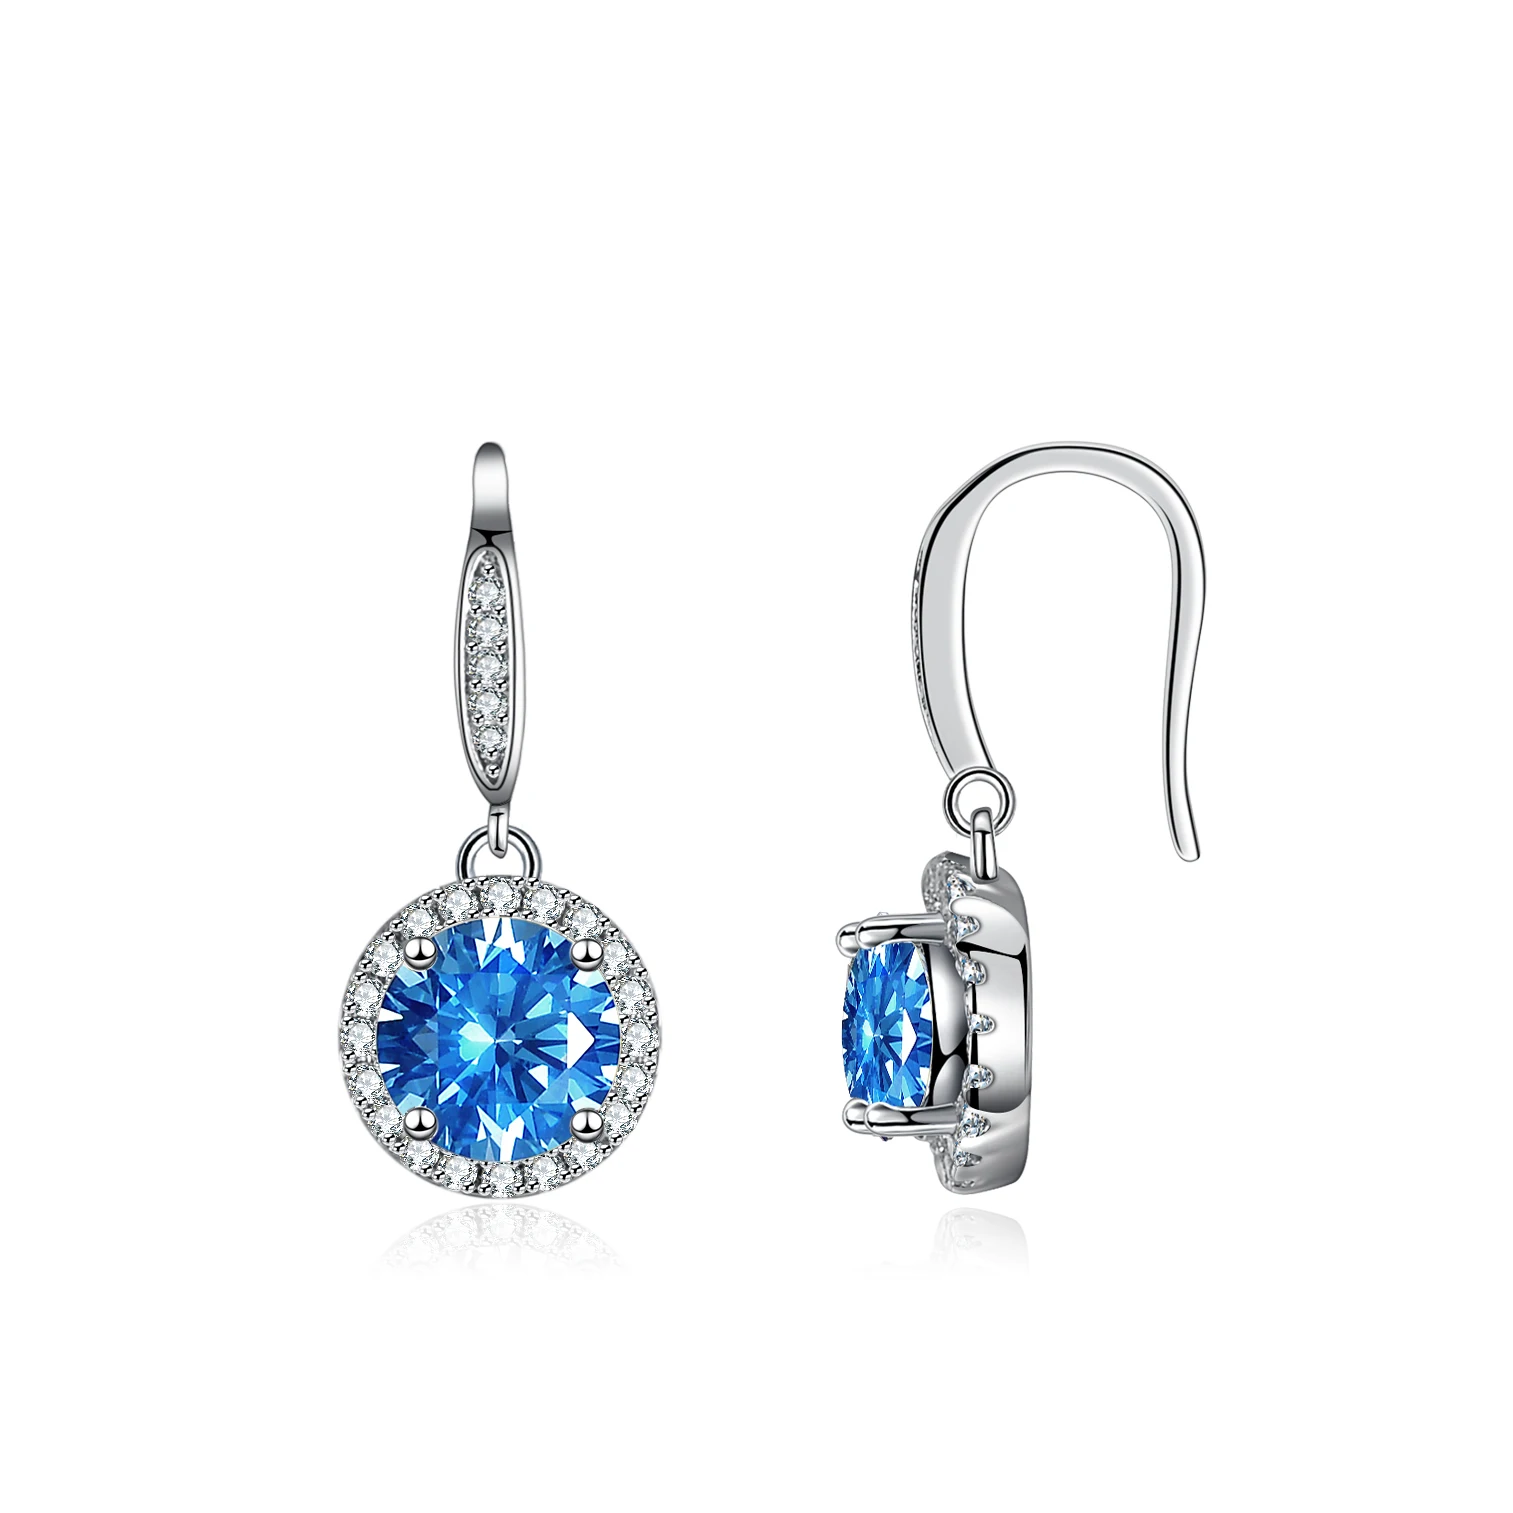 High quality gra certificate 1 carat vvs d color 925 silver moissanite halo earrings drop